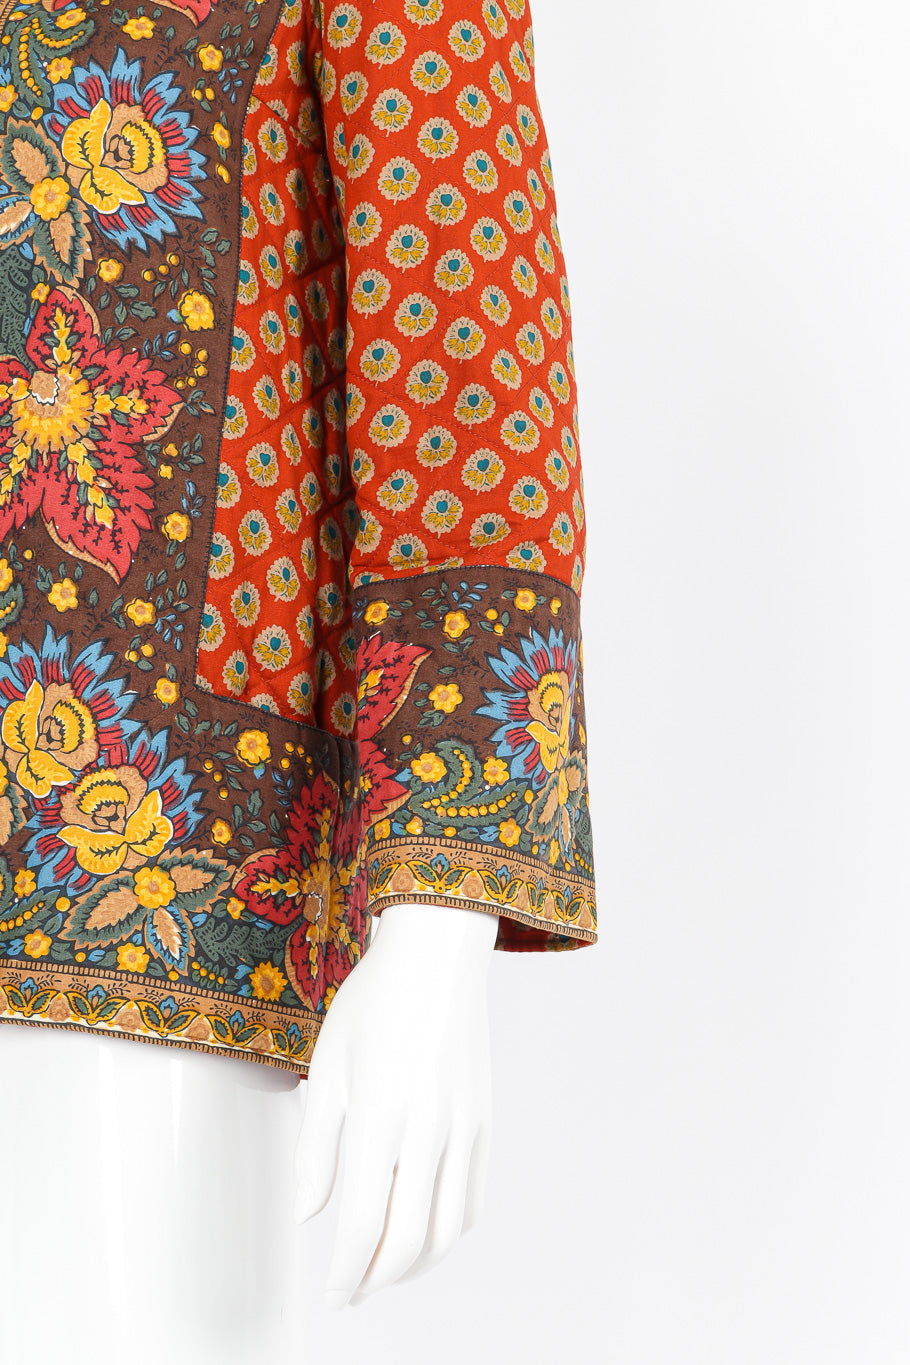 Batik print quilted jacket by La Provence on mannequin sleeve @recessla